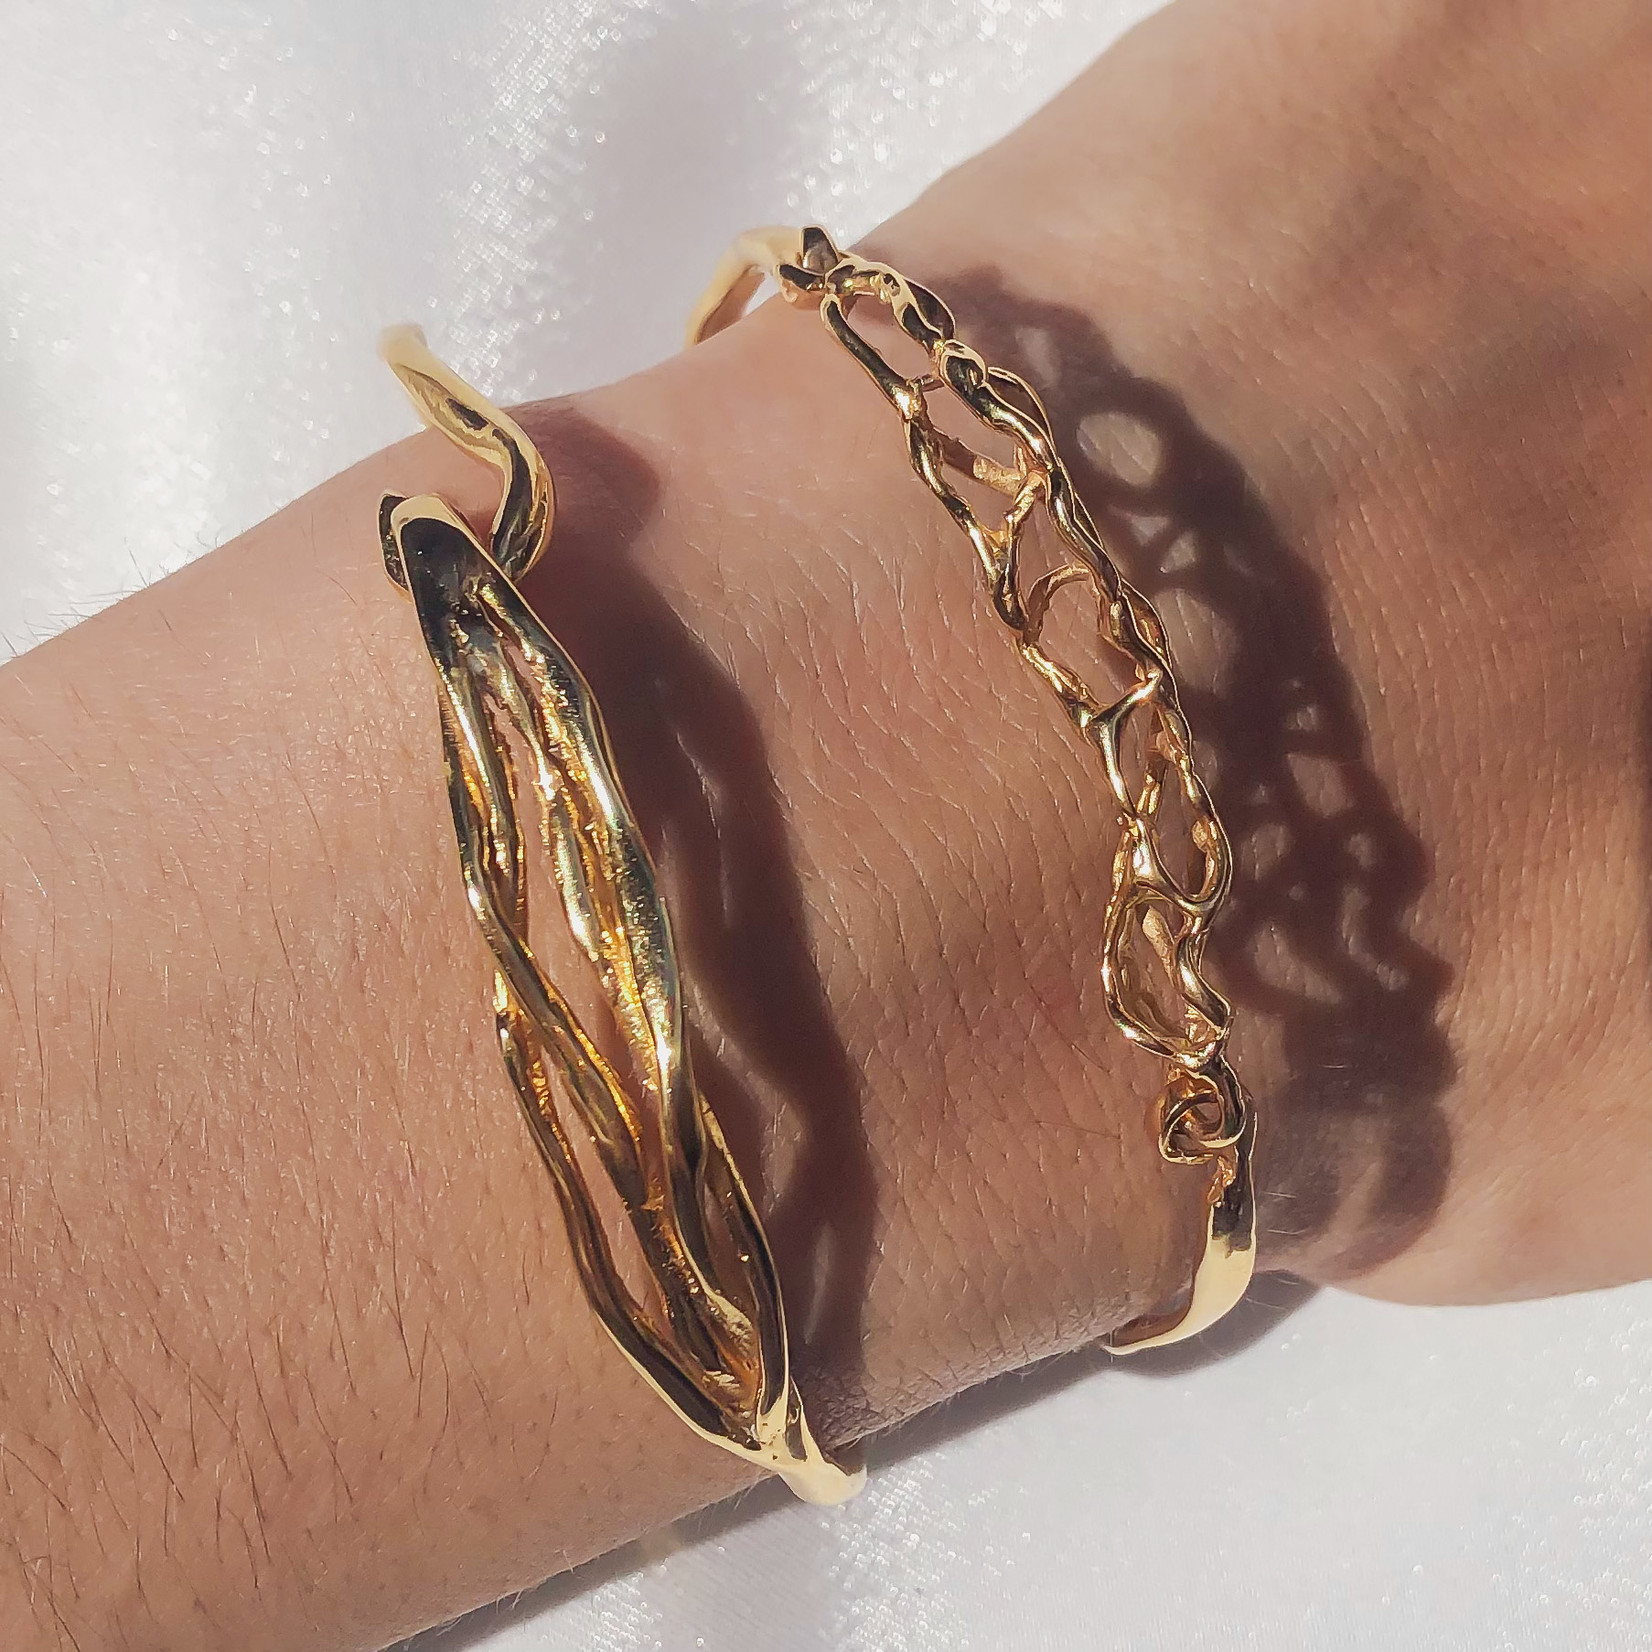 TEGO Liquid golden band bracelet